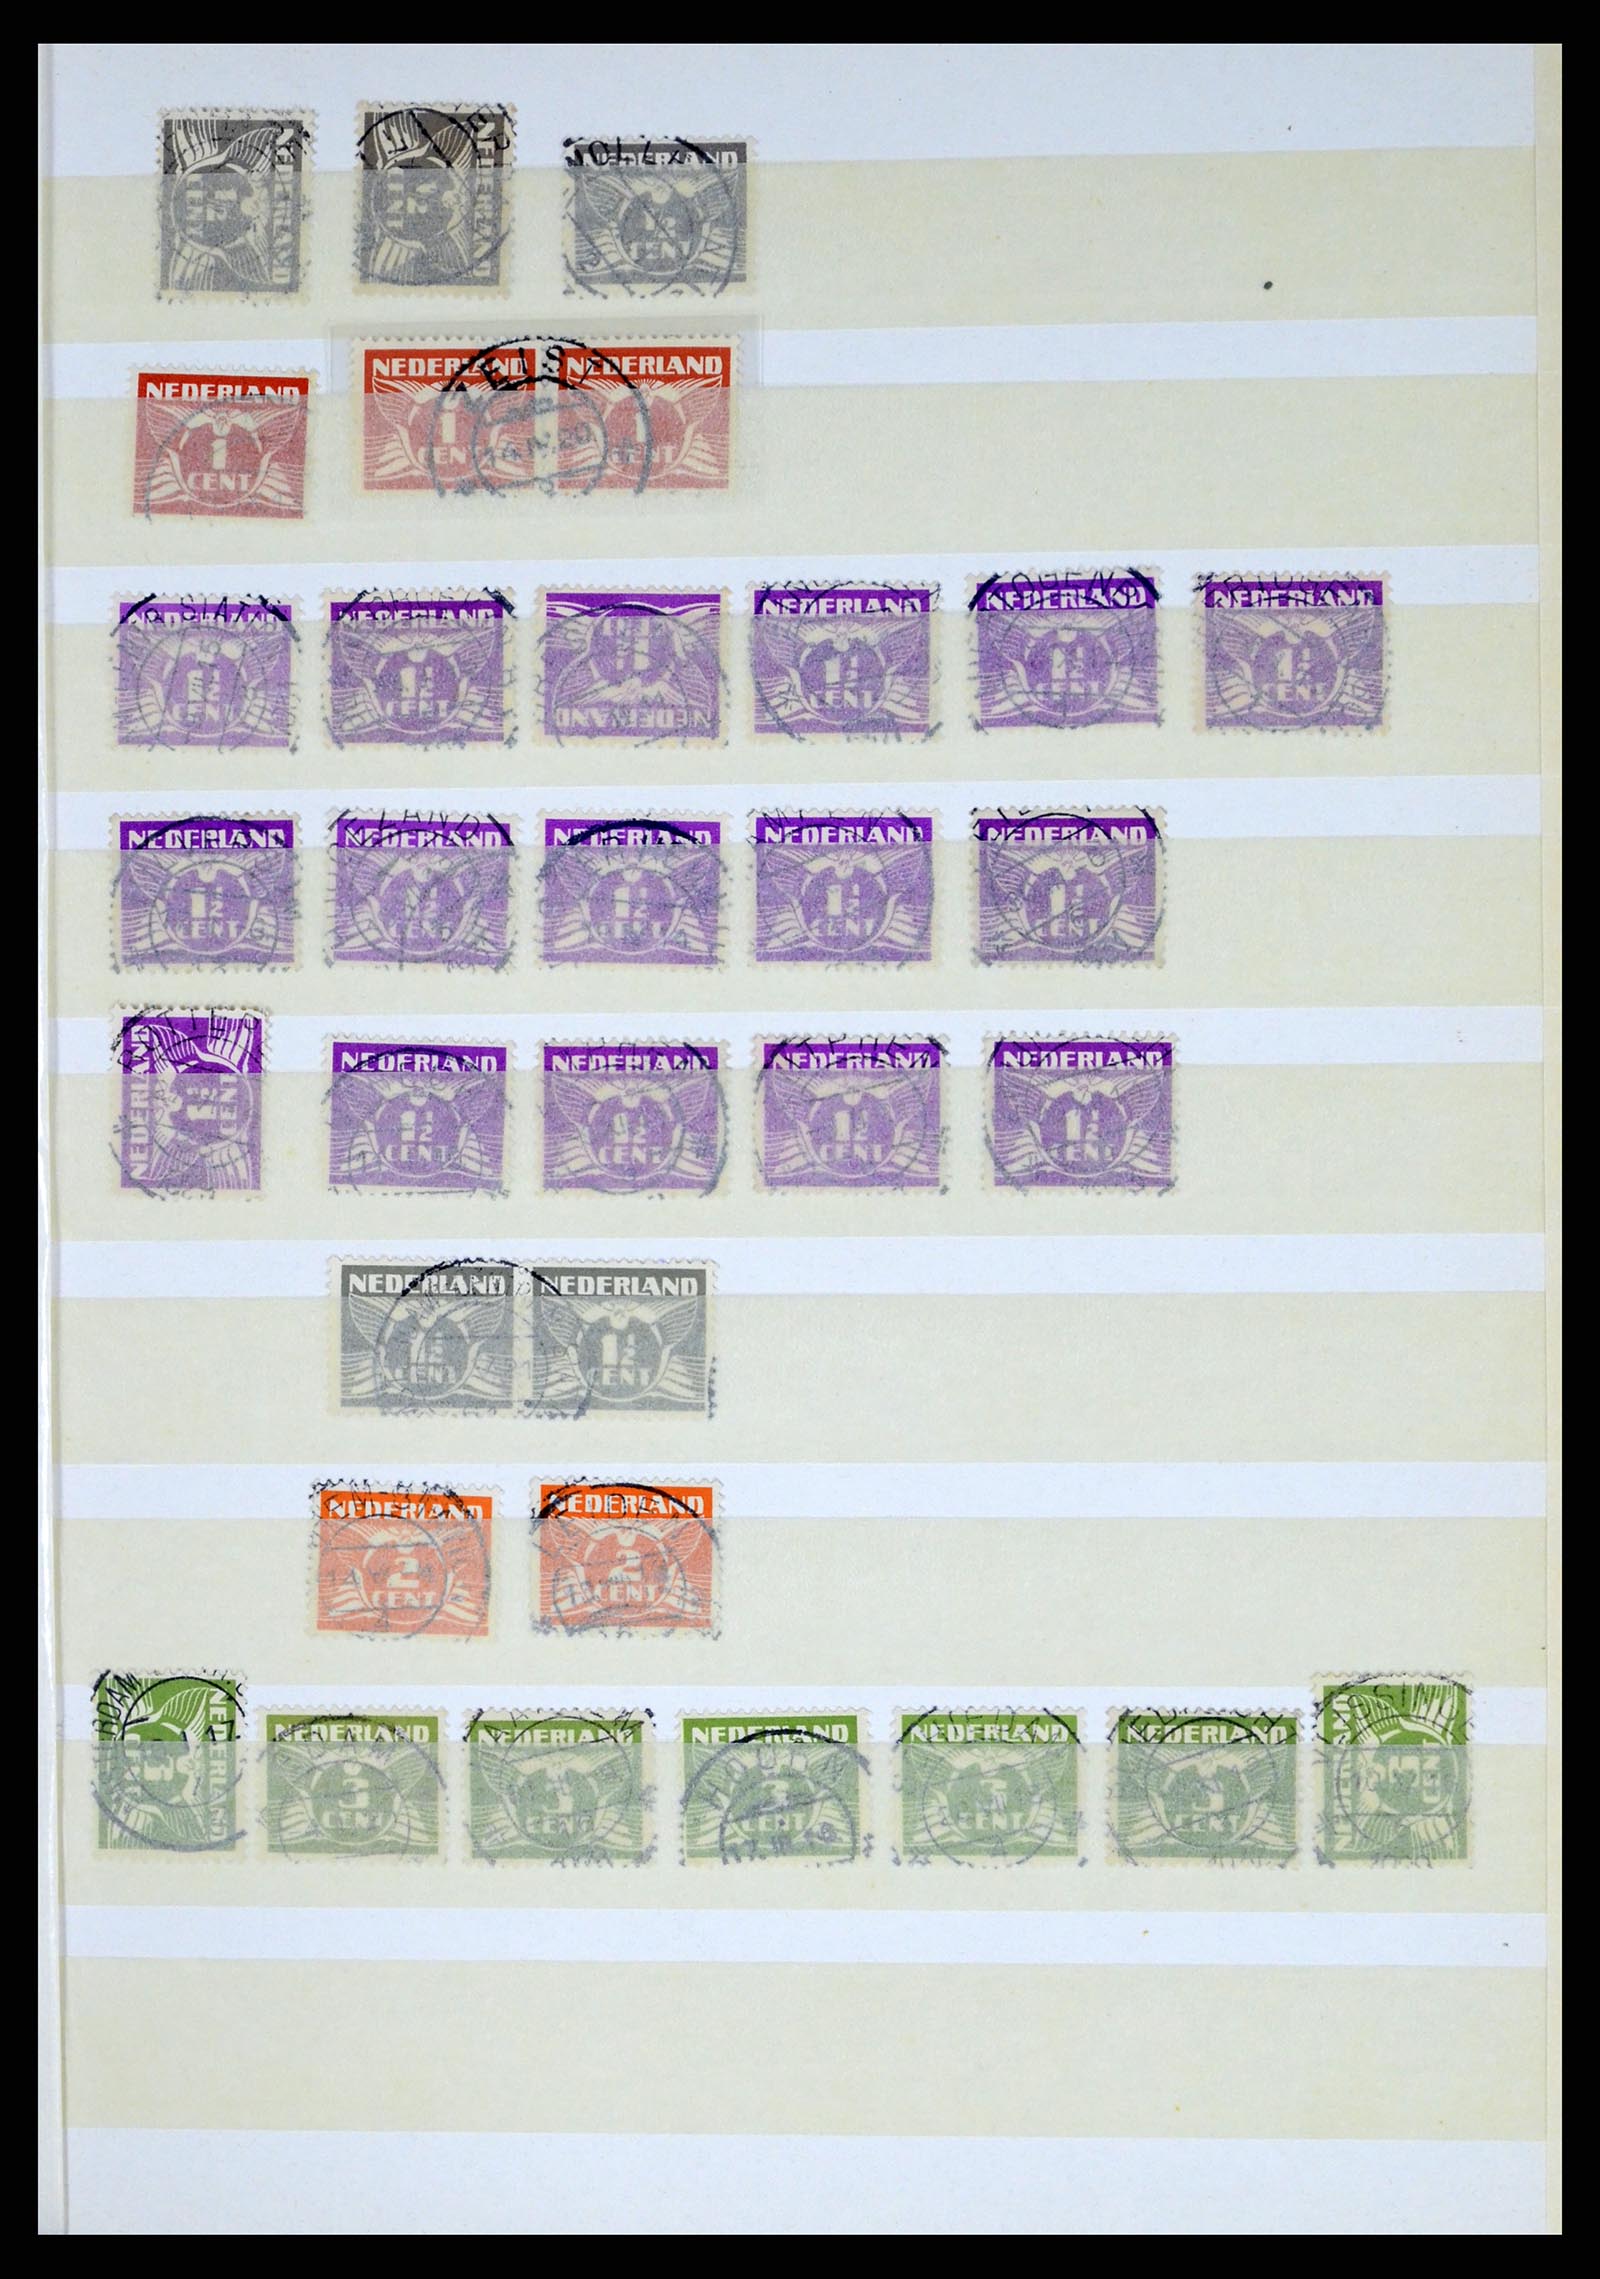 37424 005 - Stamp collection 37424 Netherlands shortbar cancels.